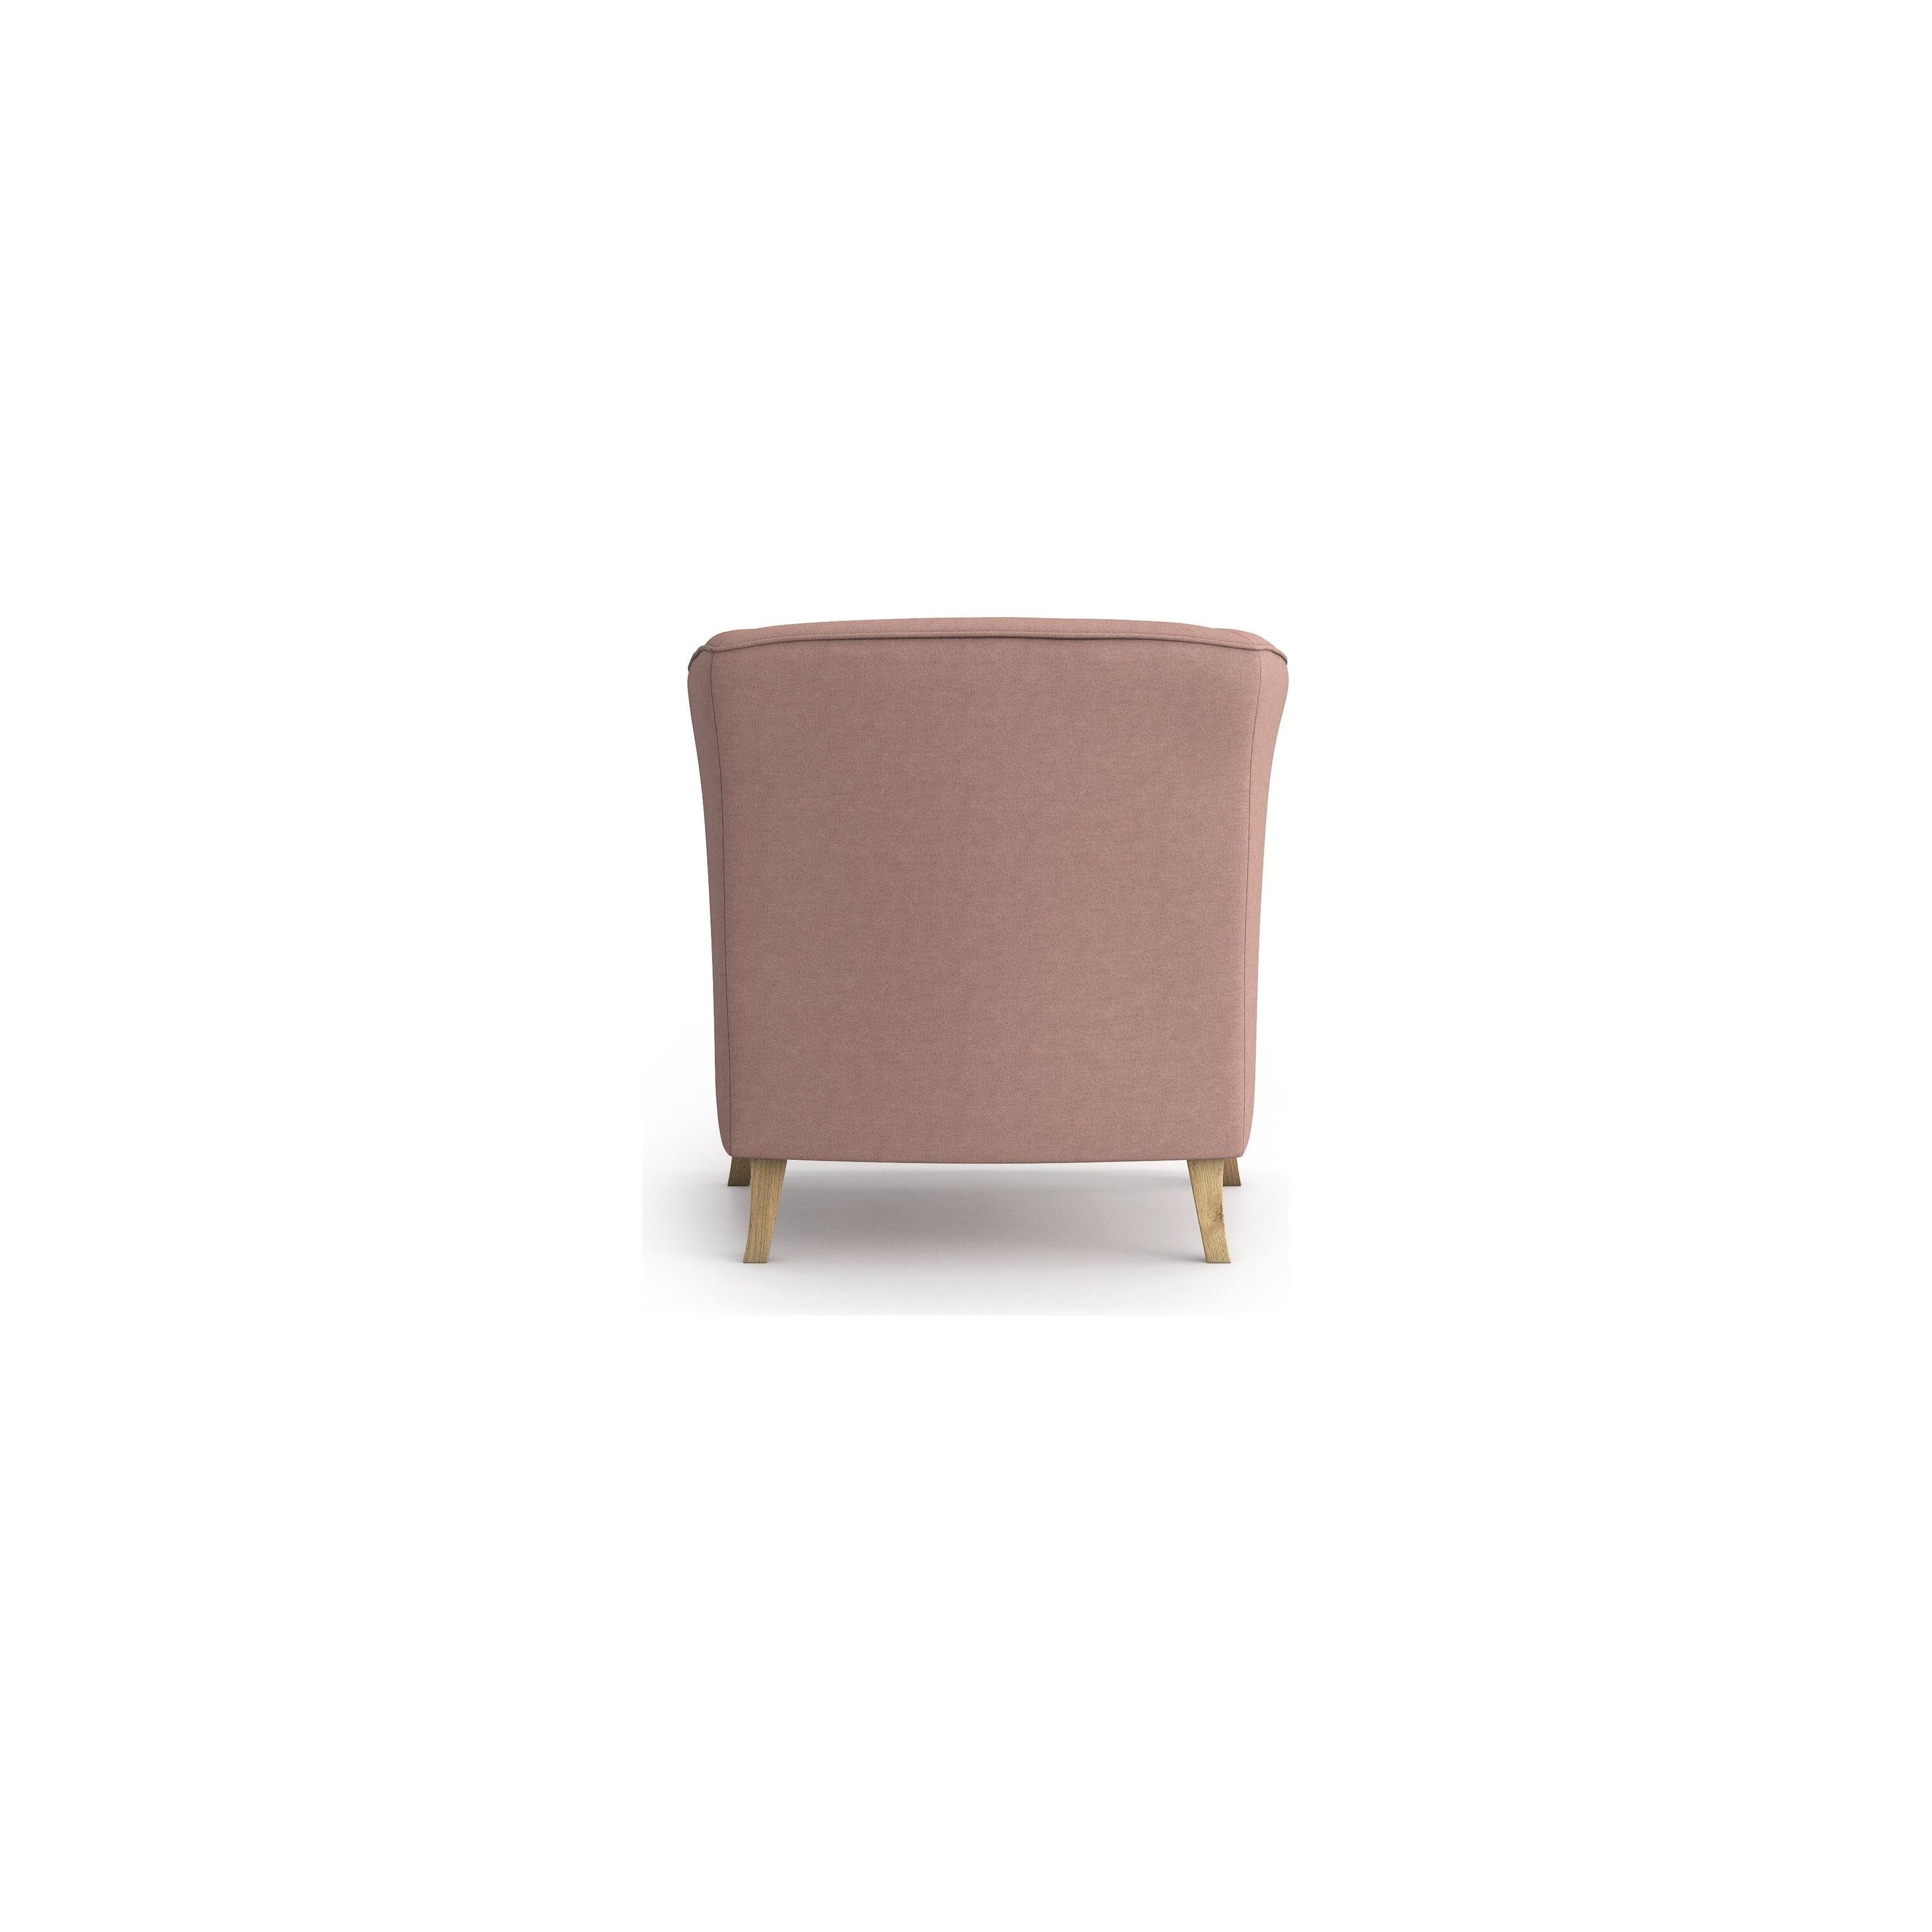 JULIETT fotelis, rožinė spalva